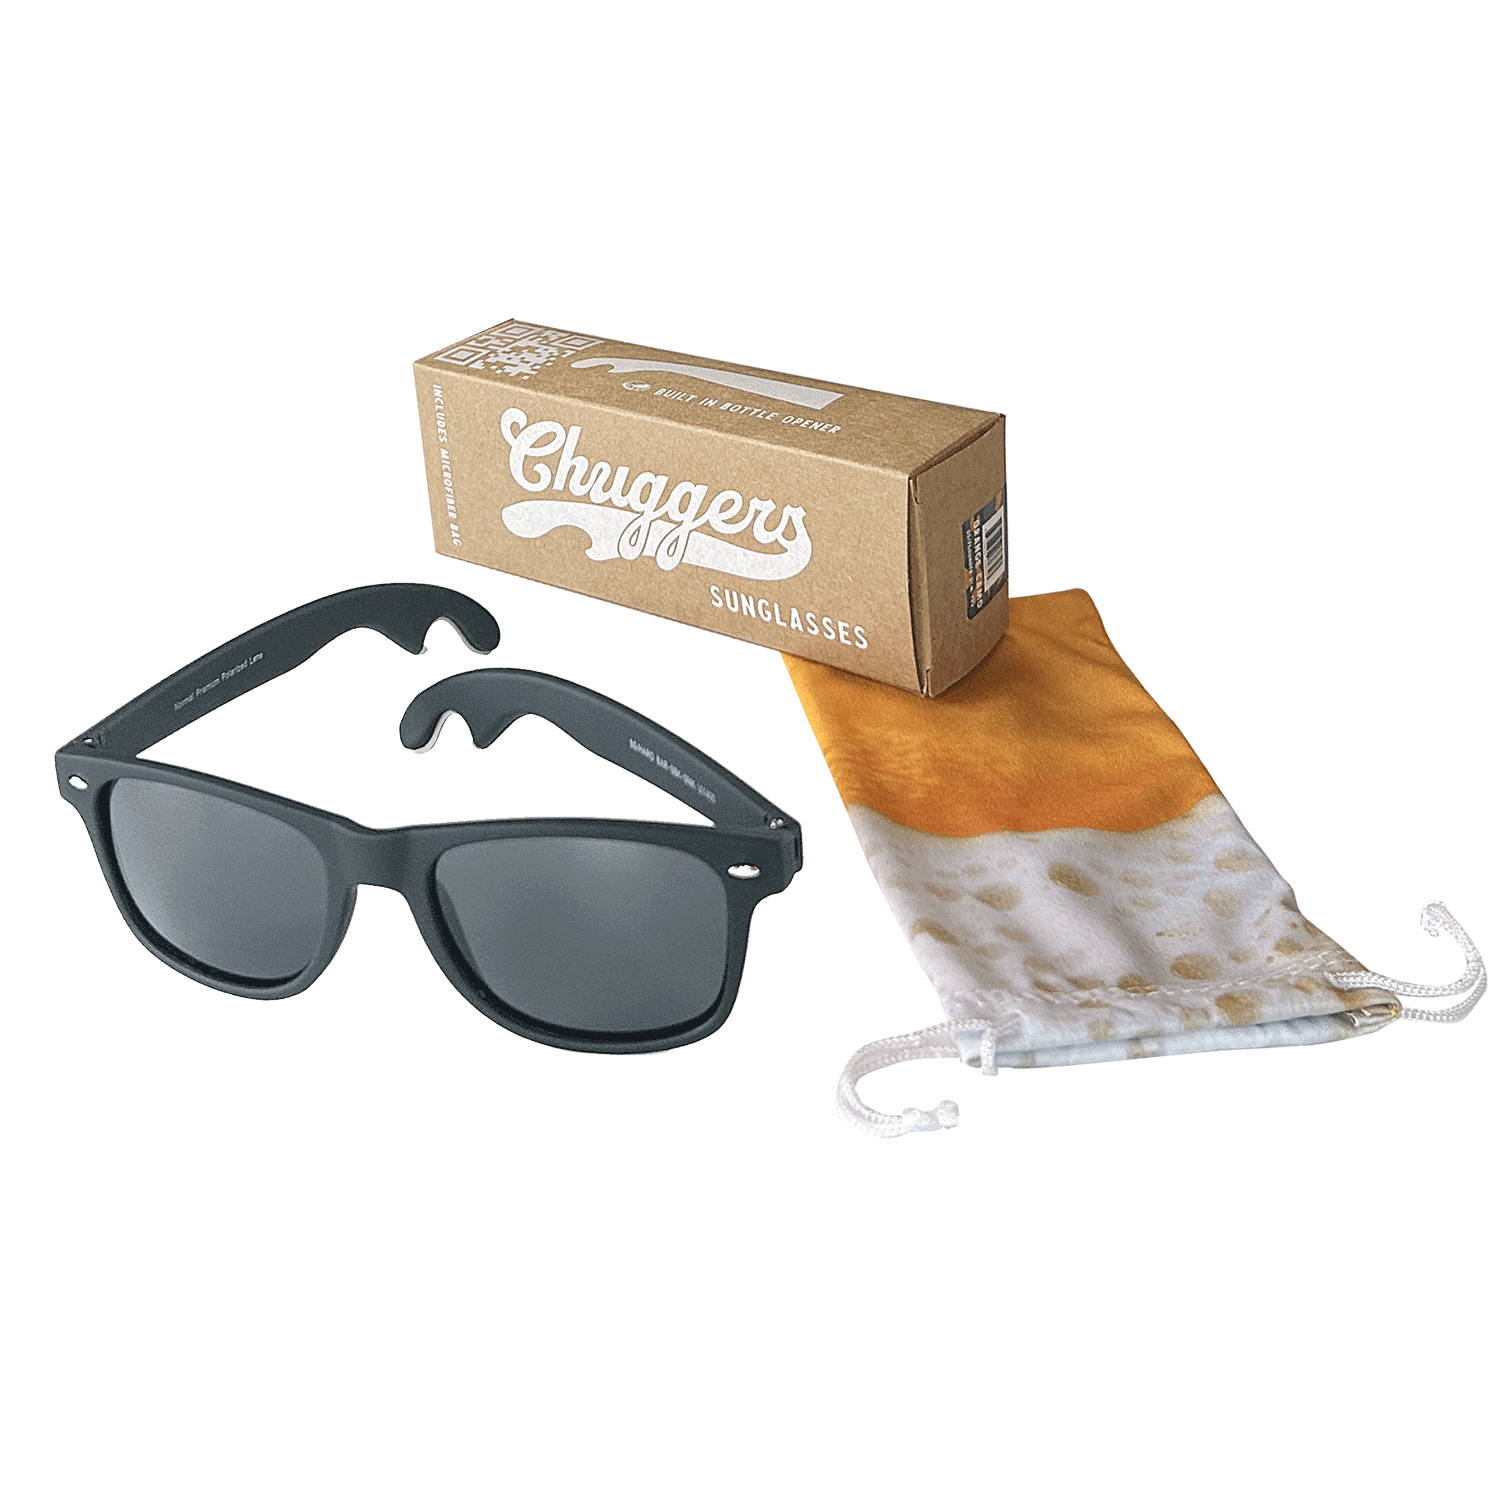 BAR-SBK-SMK Brand SolarX with – Sunglasses Opener Black Eyewear SS/HARD – Temple Chugger Bottle